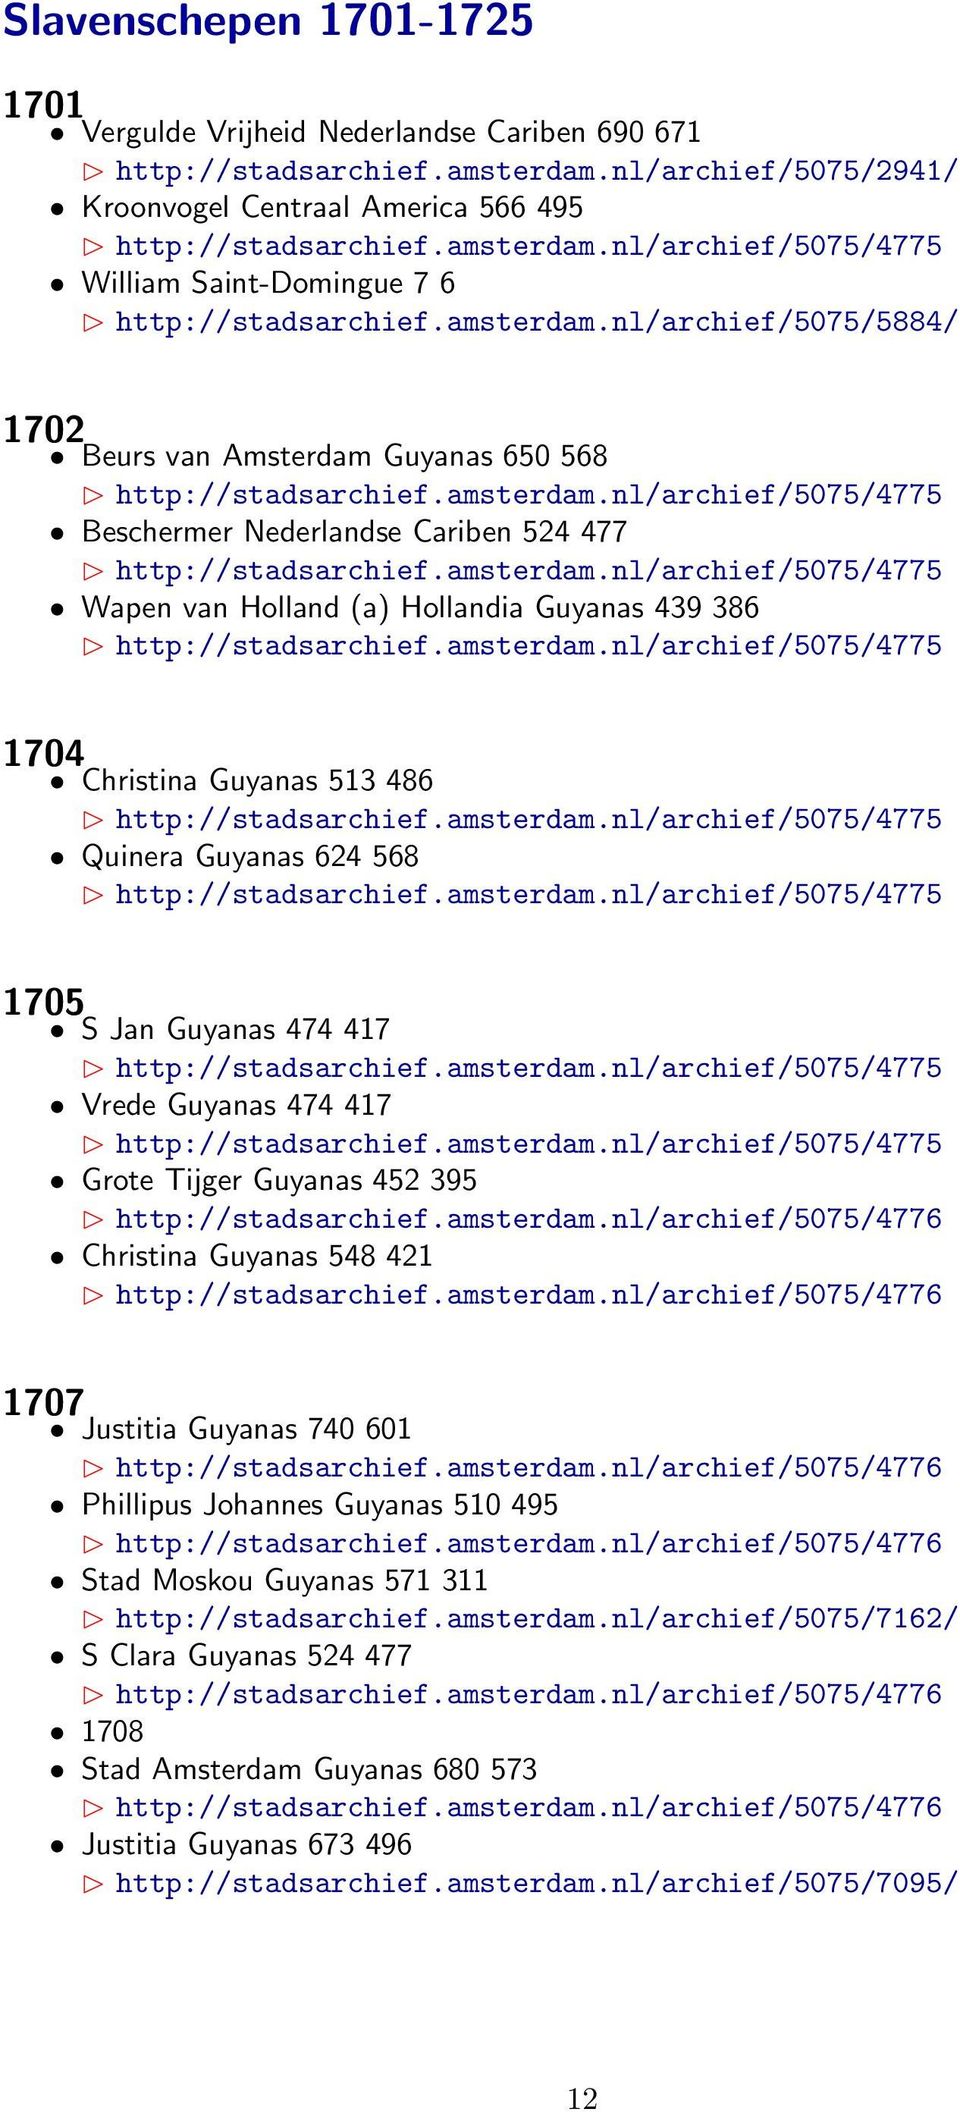 amsterdam.nl/archief/5075/4775 1704 Christina Guyanas 513 486 http://stadsarchief.amsterdam.nl/archief/5075/4775 Quinera Guyanas 624 568 http://stadsarchief.amsterdam.nl/archief/5075/4775 1705 S Jan Guyanas 474 417 http://stadsarchief.